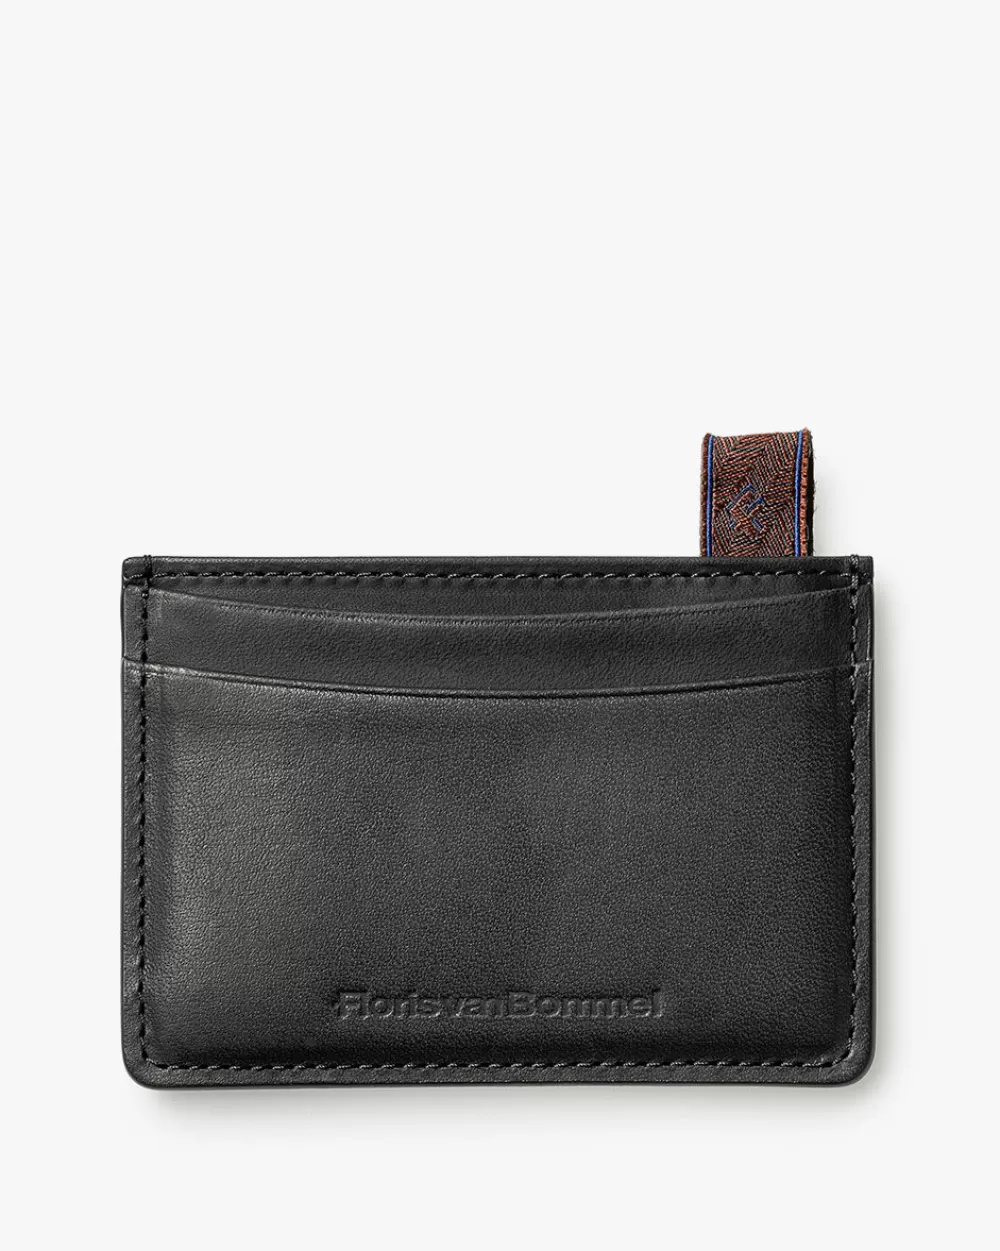 Card holder leather *Floris van Bommel Online